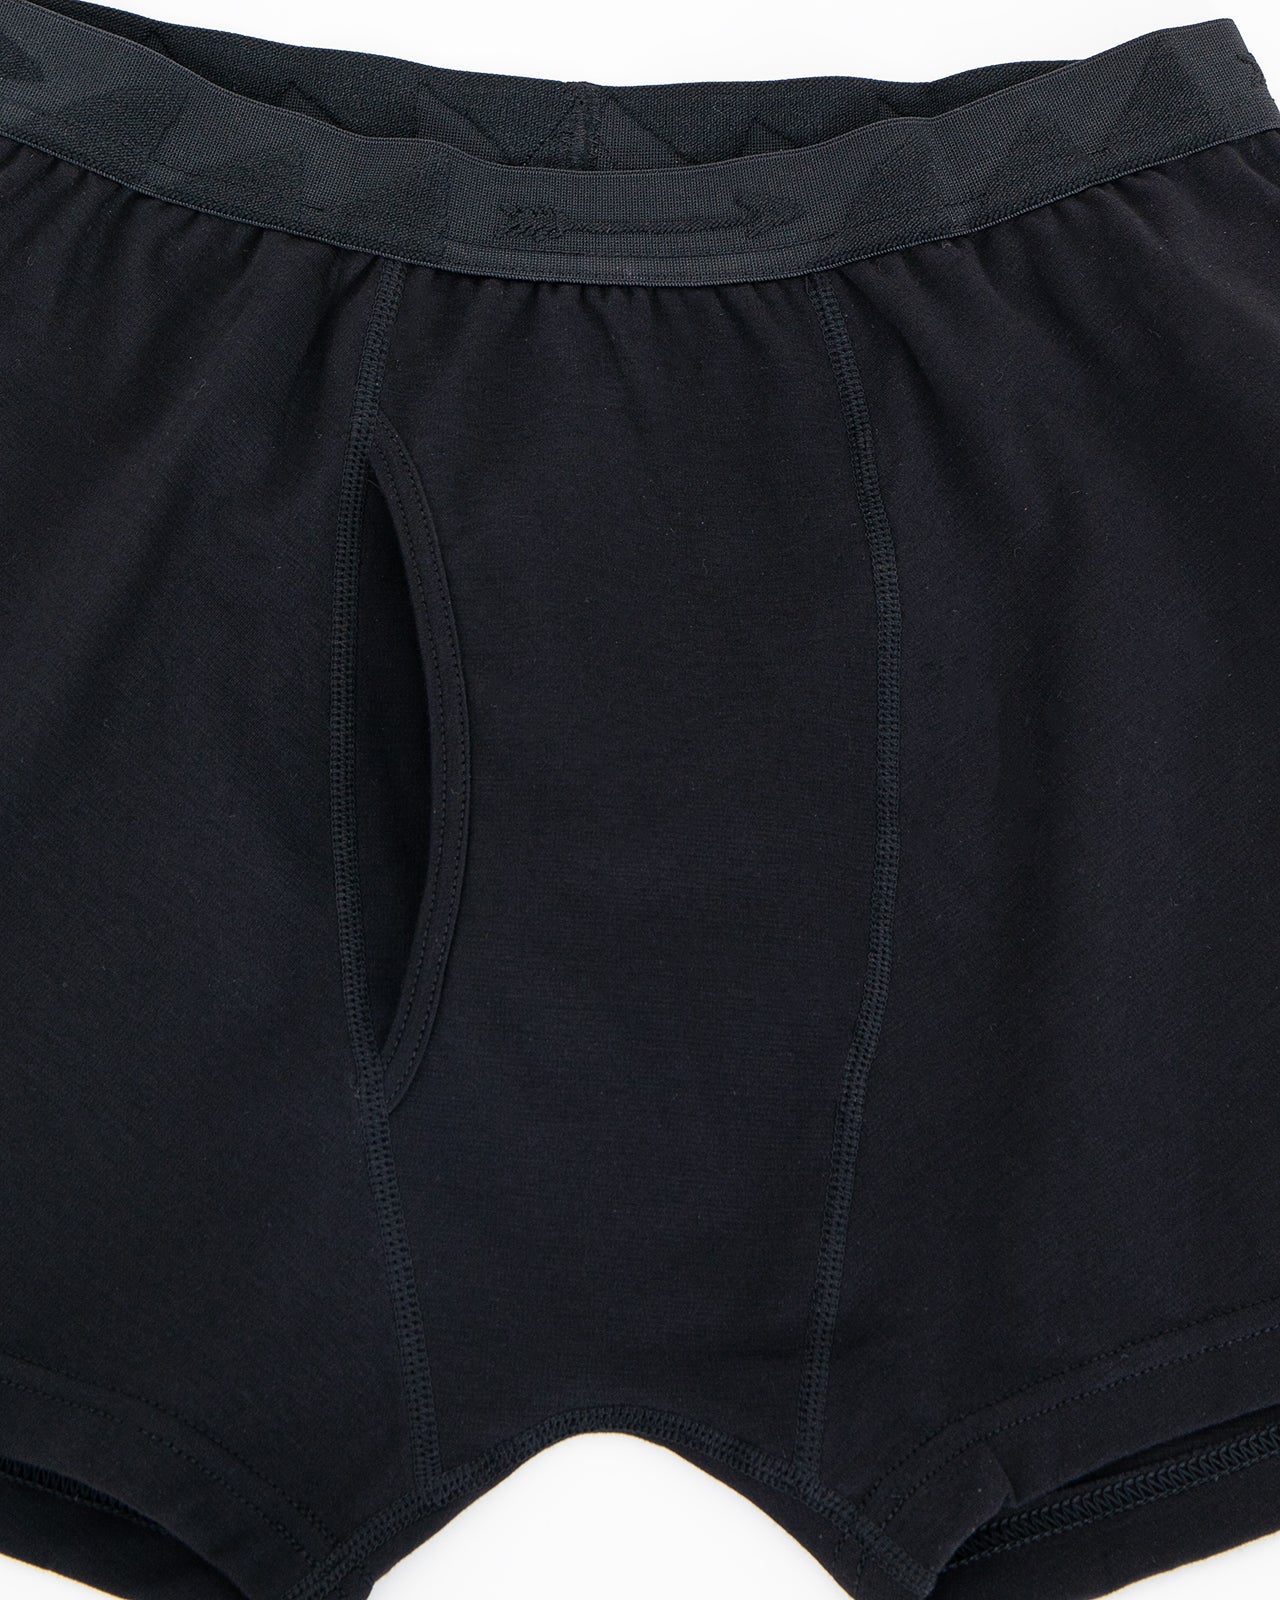 Kapital Comfort Stretch Jersey Trunks (Heat), Black